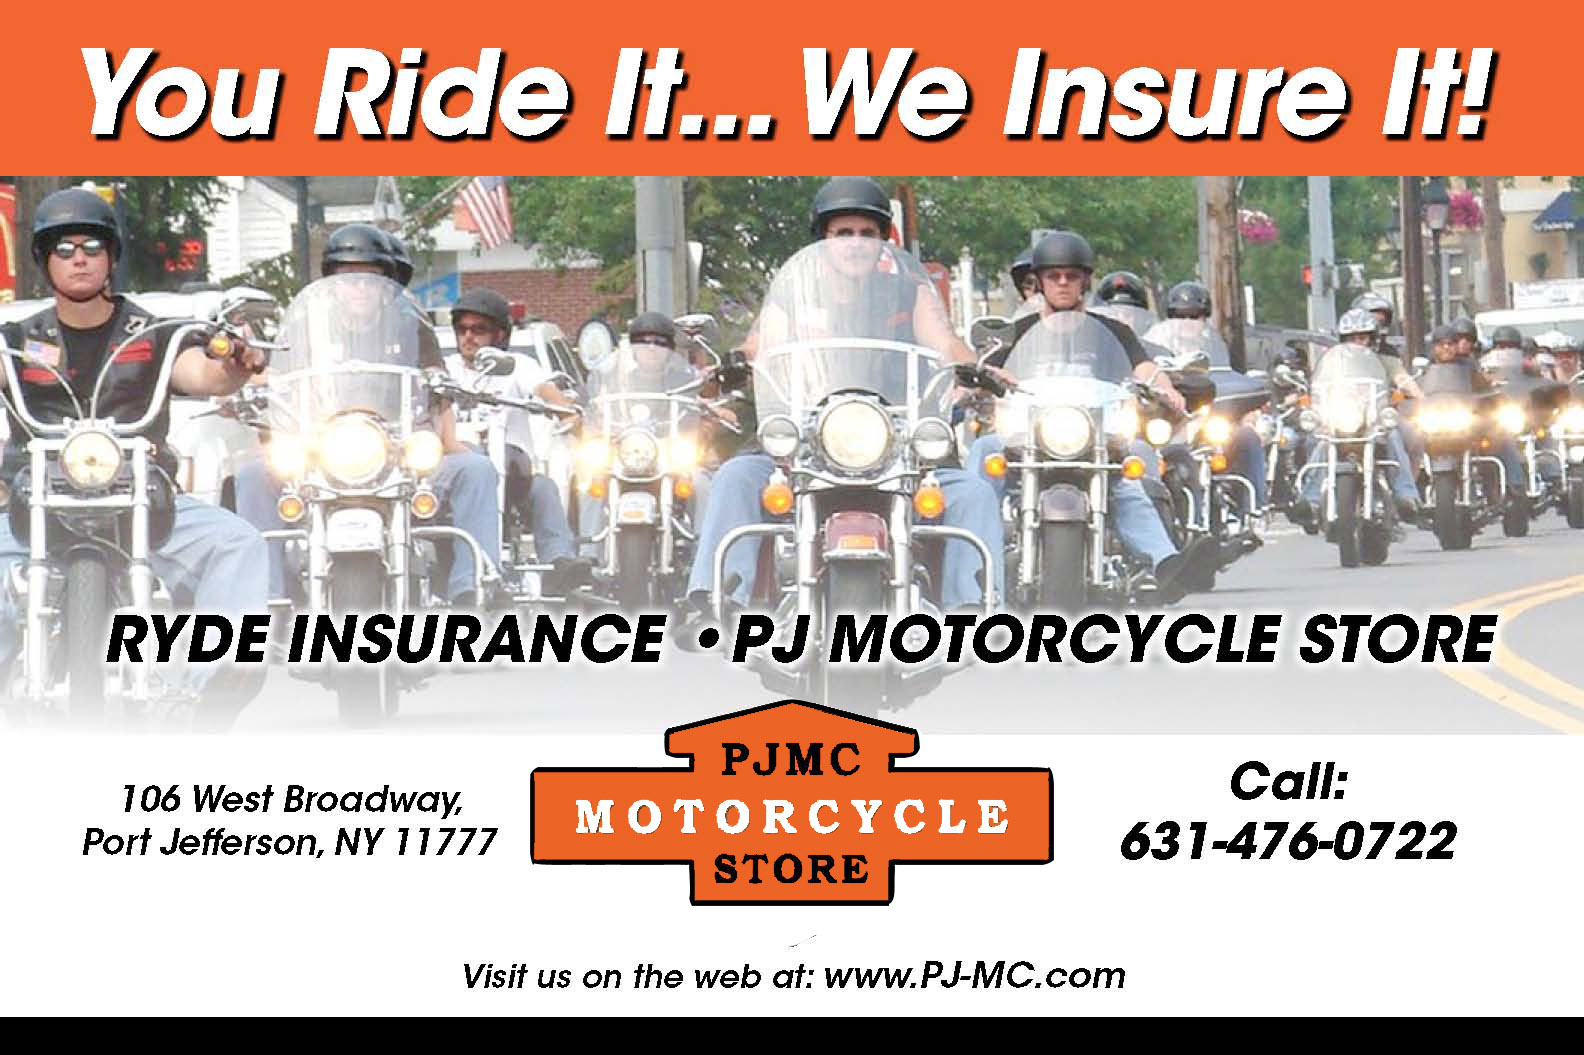 You Ride It... We Insure It